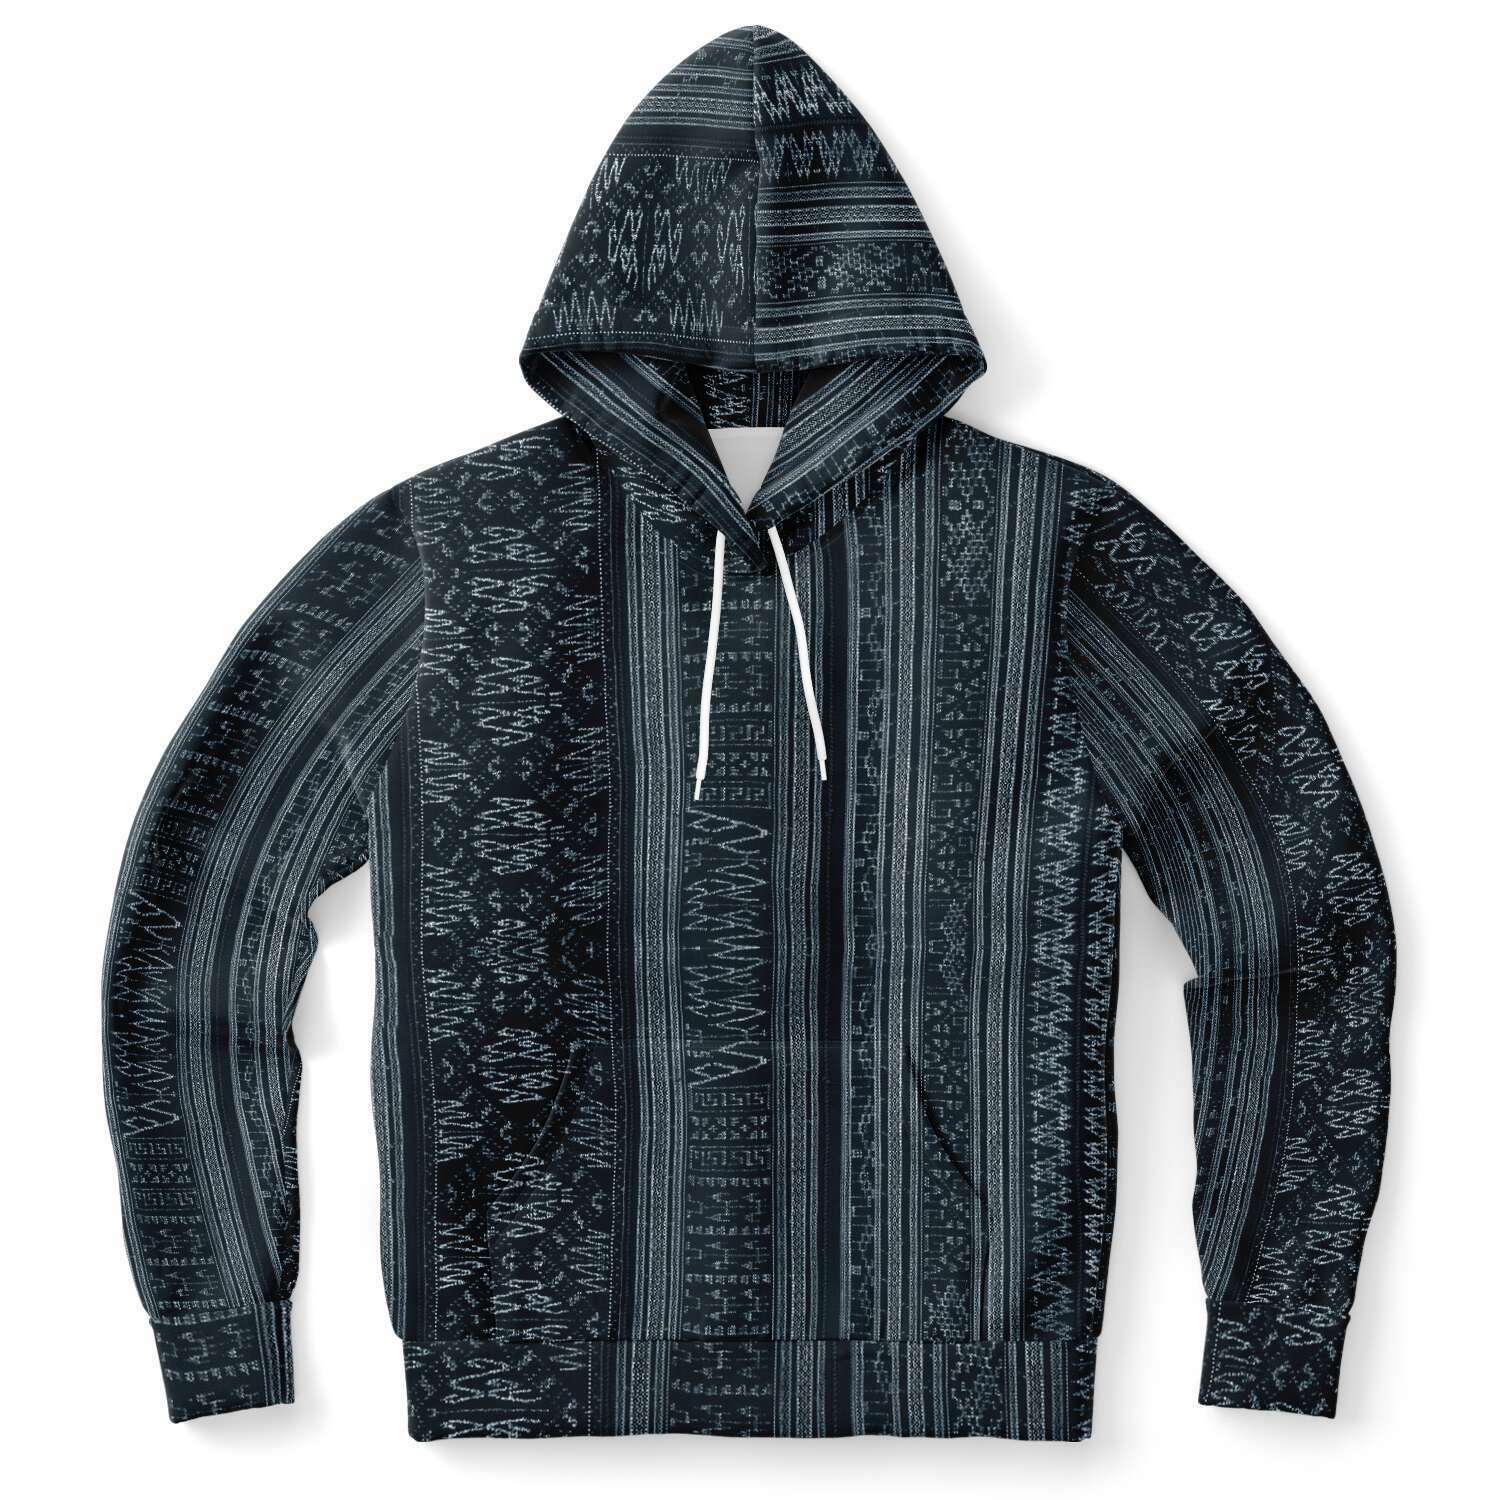 Fashion Hoodie - AOP XS Navy Blue Ikat Hoodie, Inspired by Indonesian Textiles, Kuba Cloth, Kilim Tribal Boho Vintage Pullover Hoodie